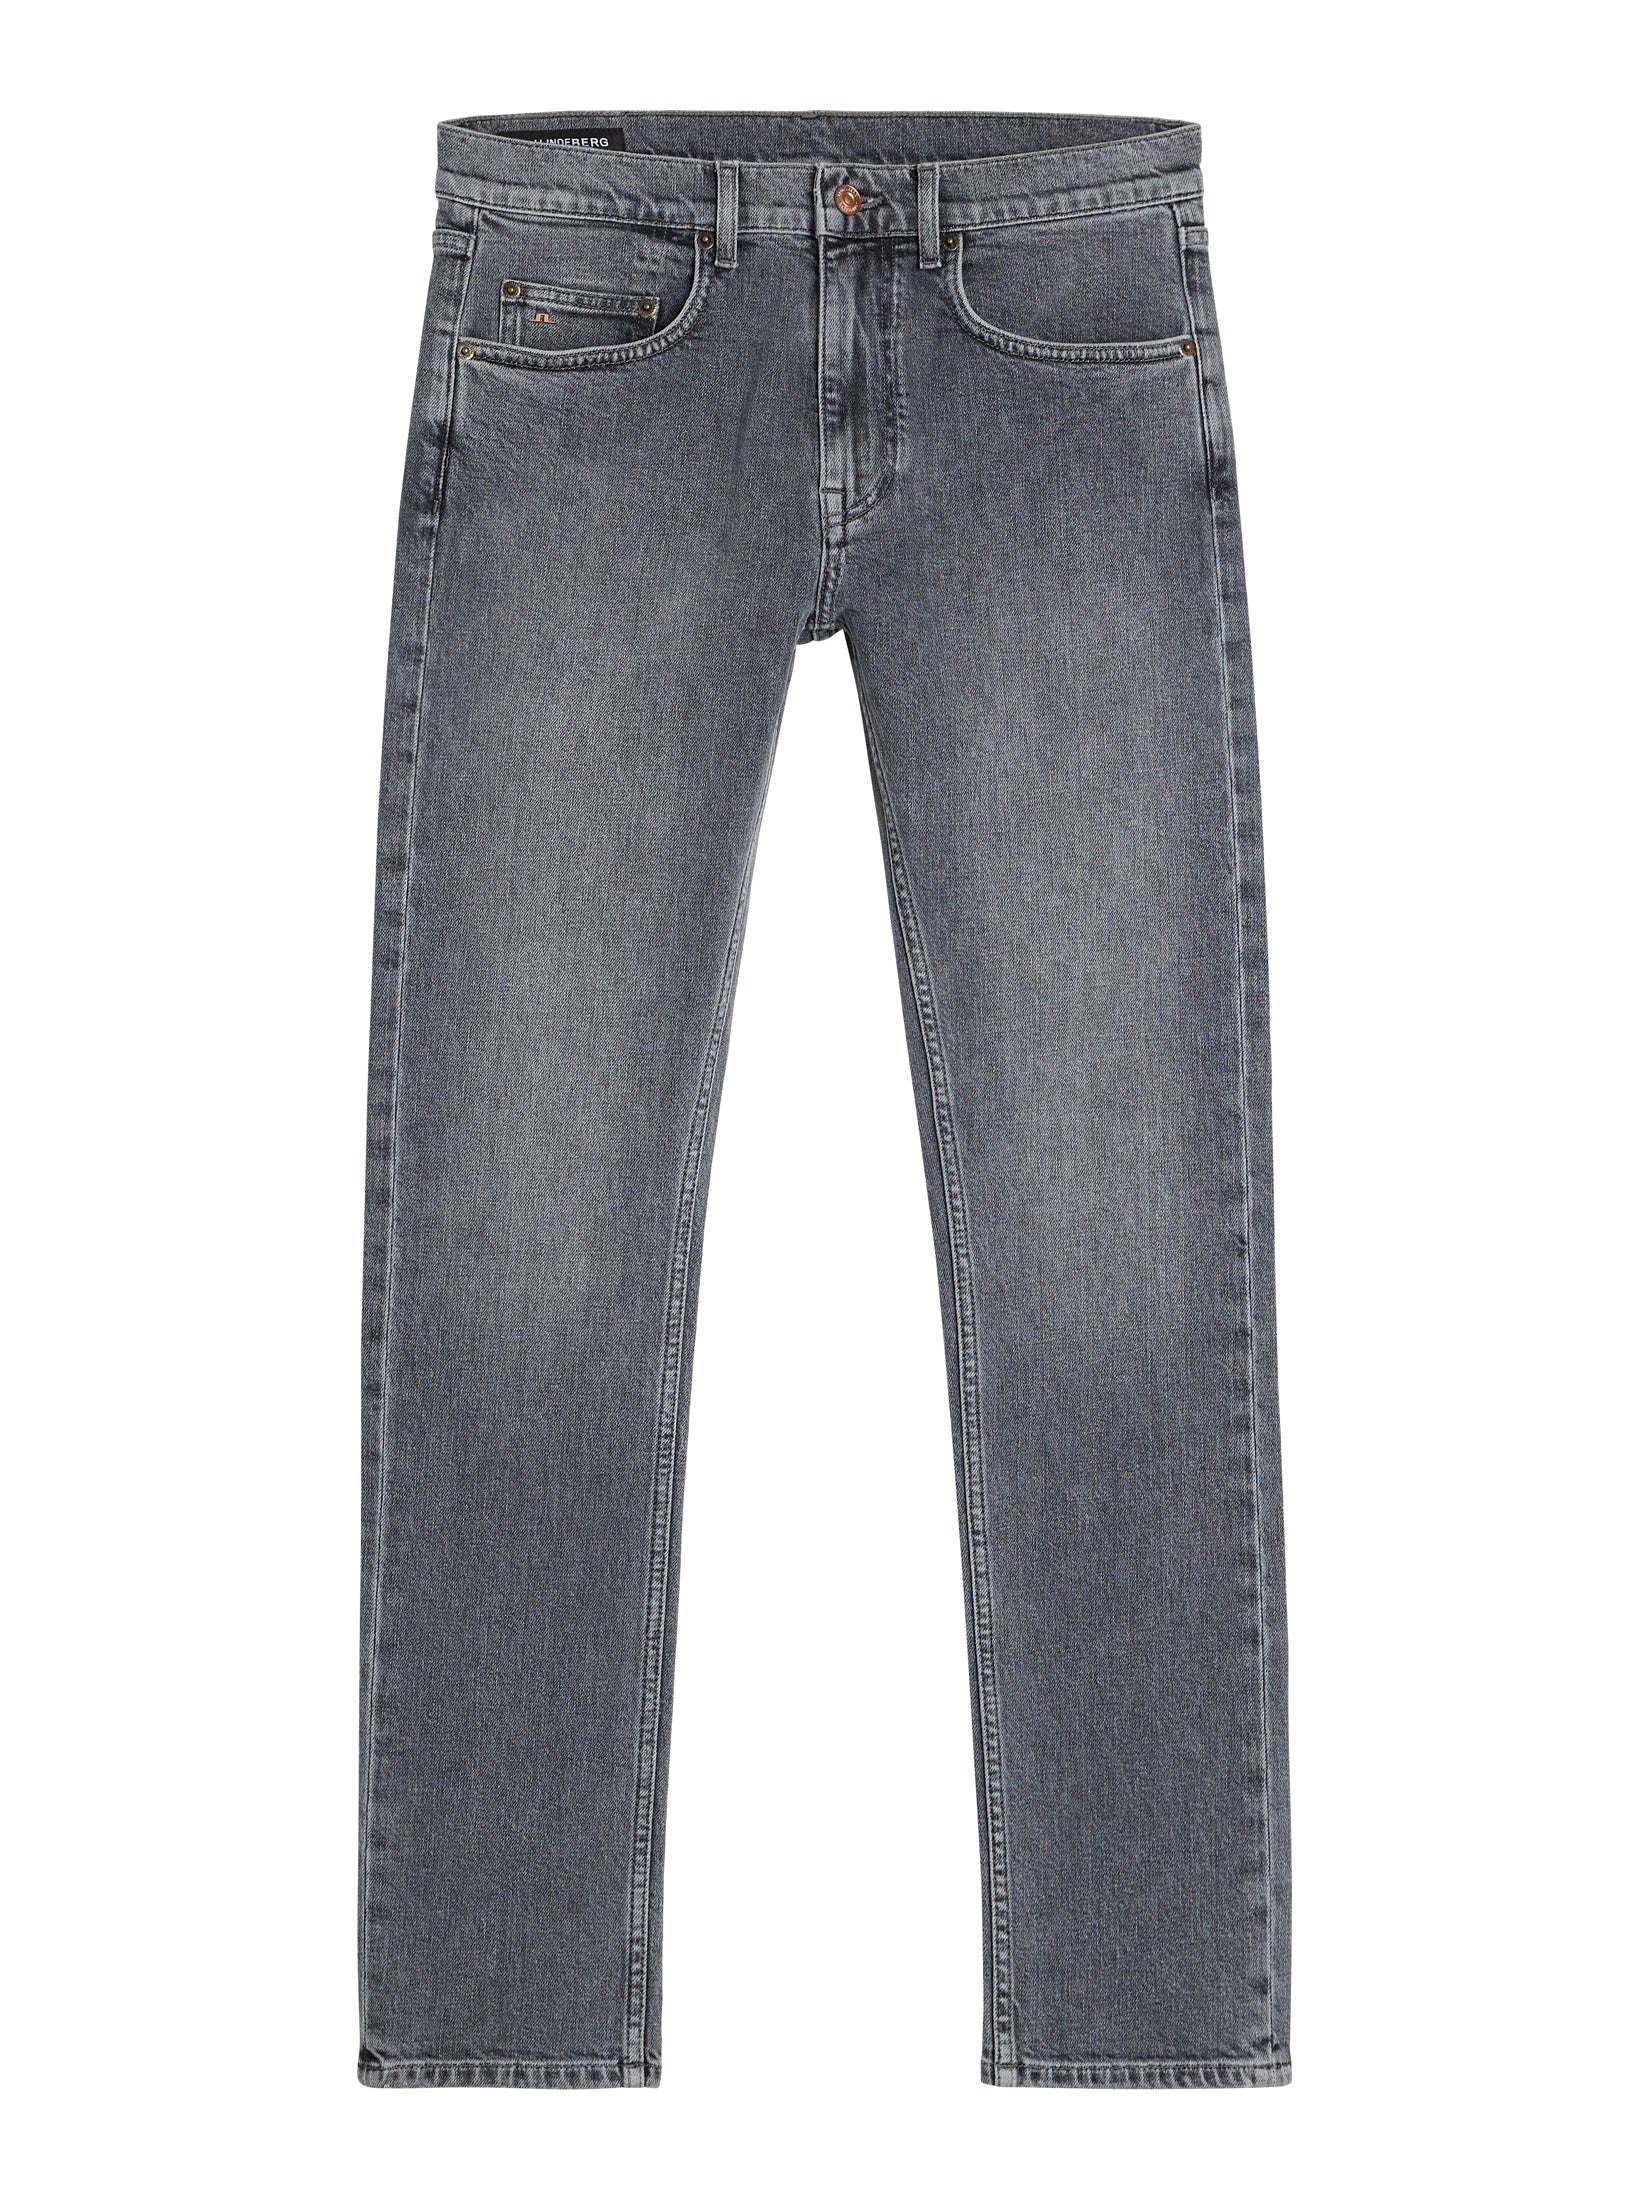 Cedar Greyish Wash Jeans